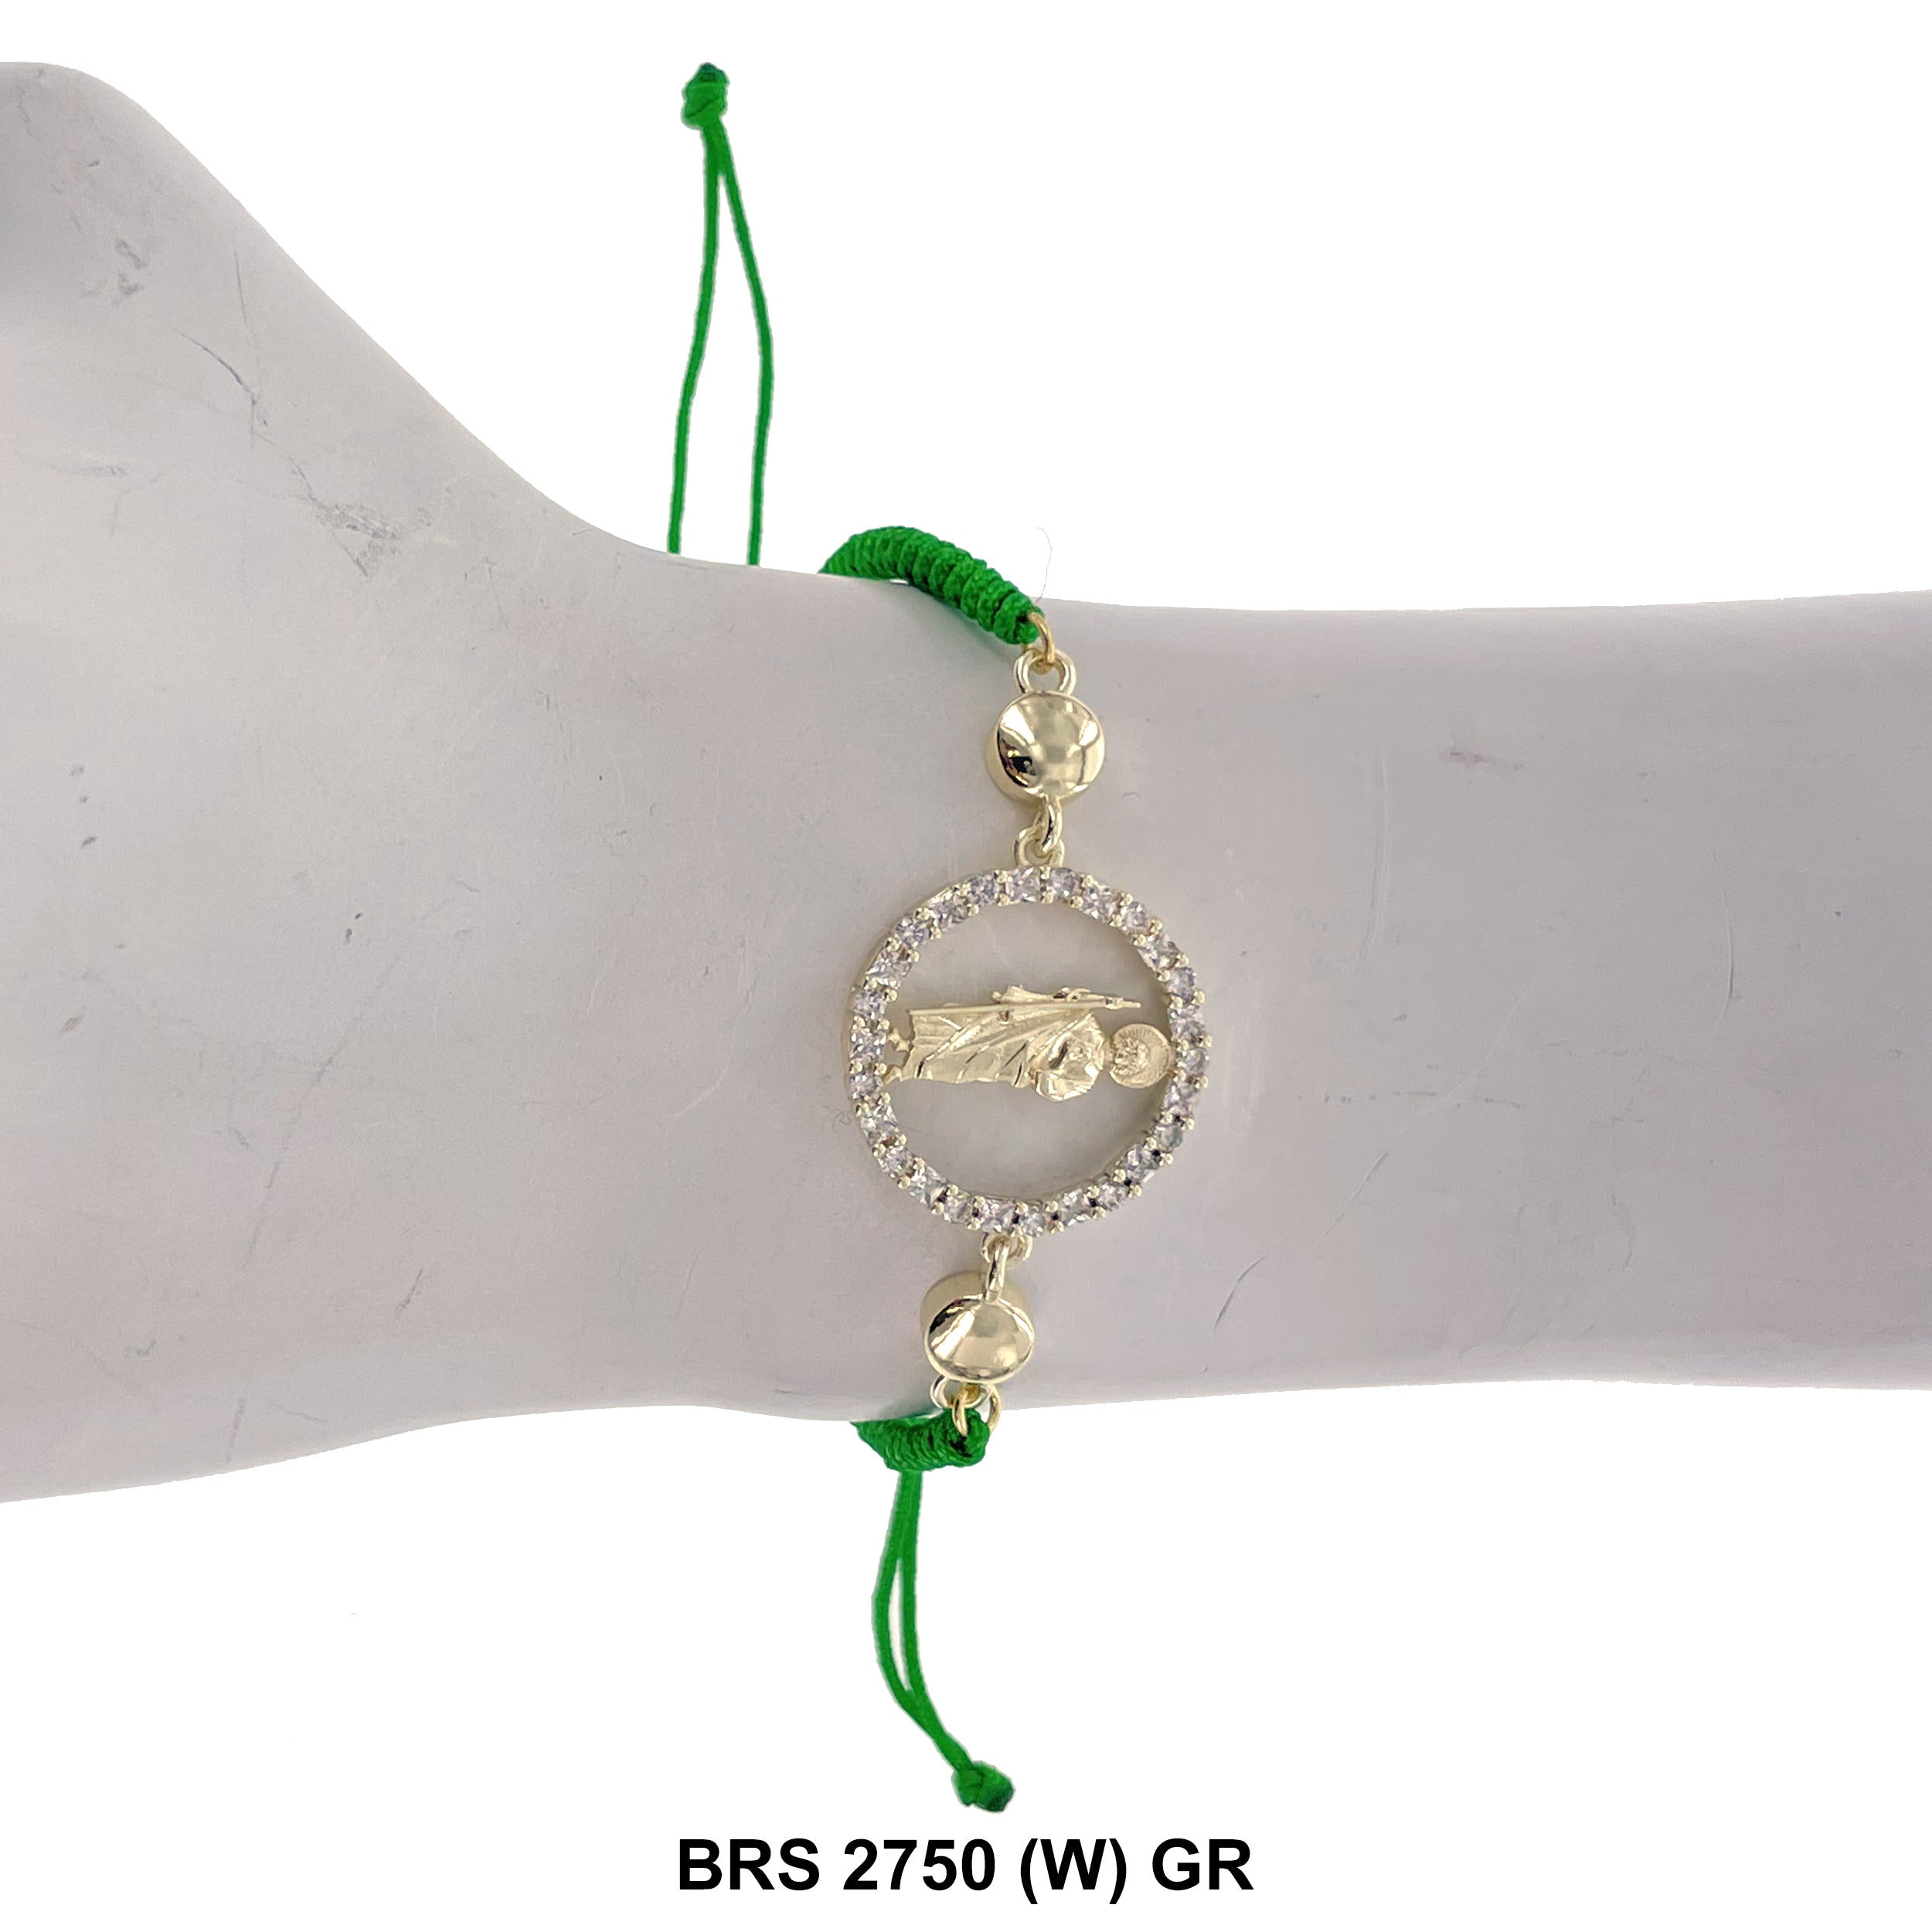 San Judas Thread Bracelets BRS 2750 (W) GR